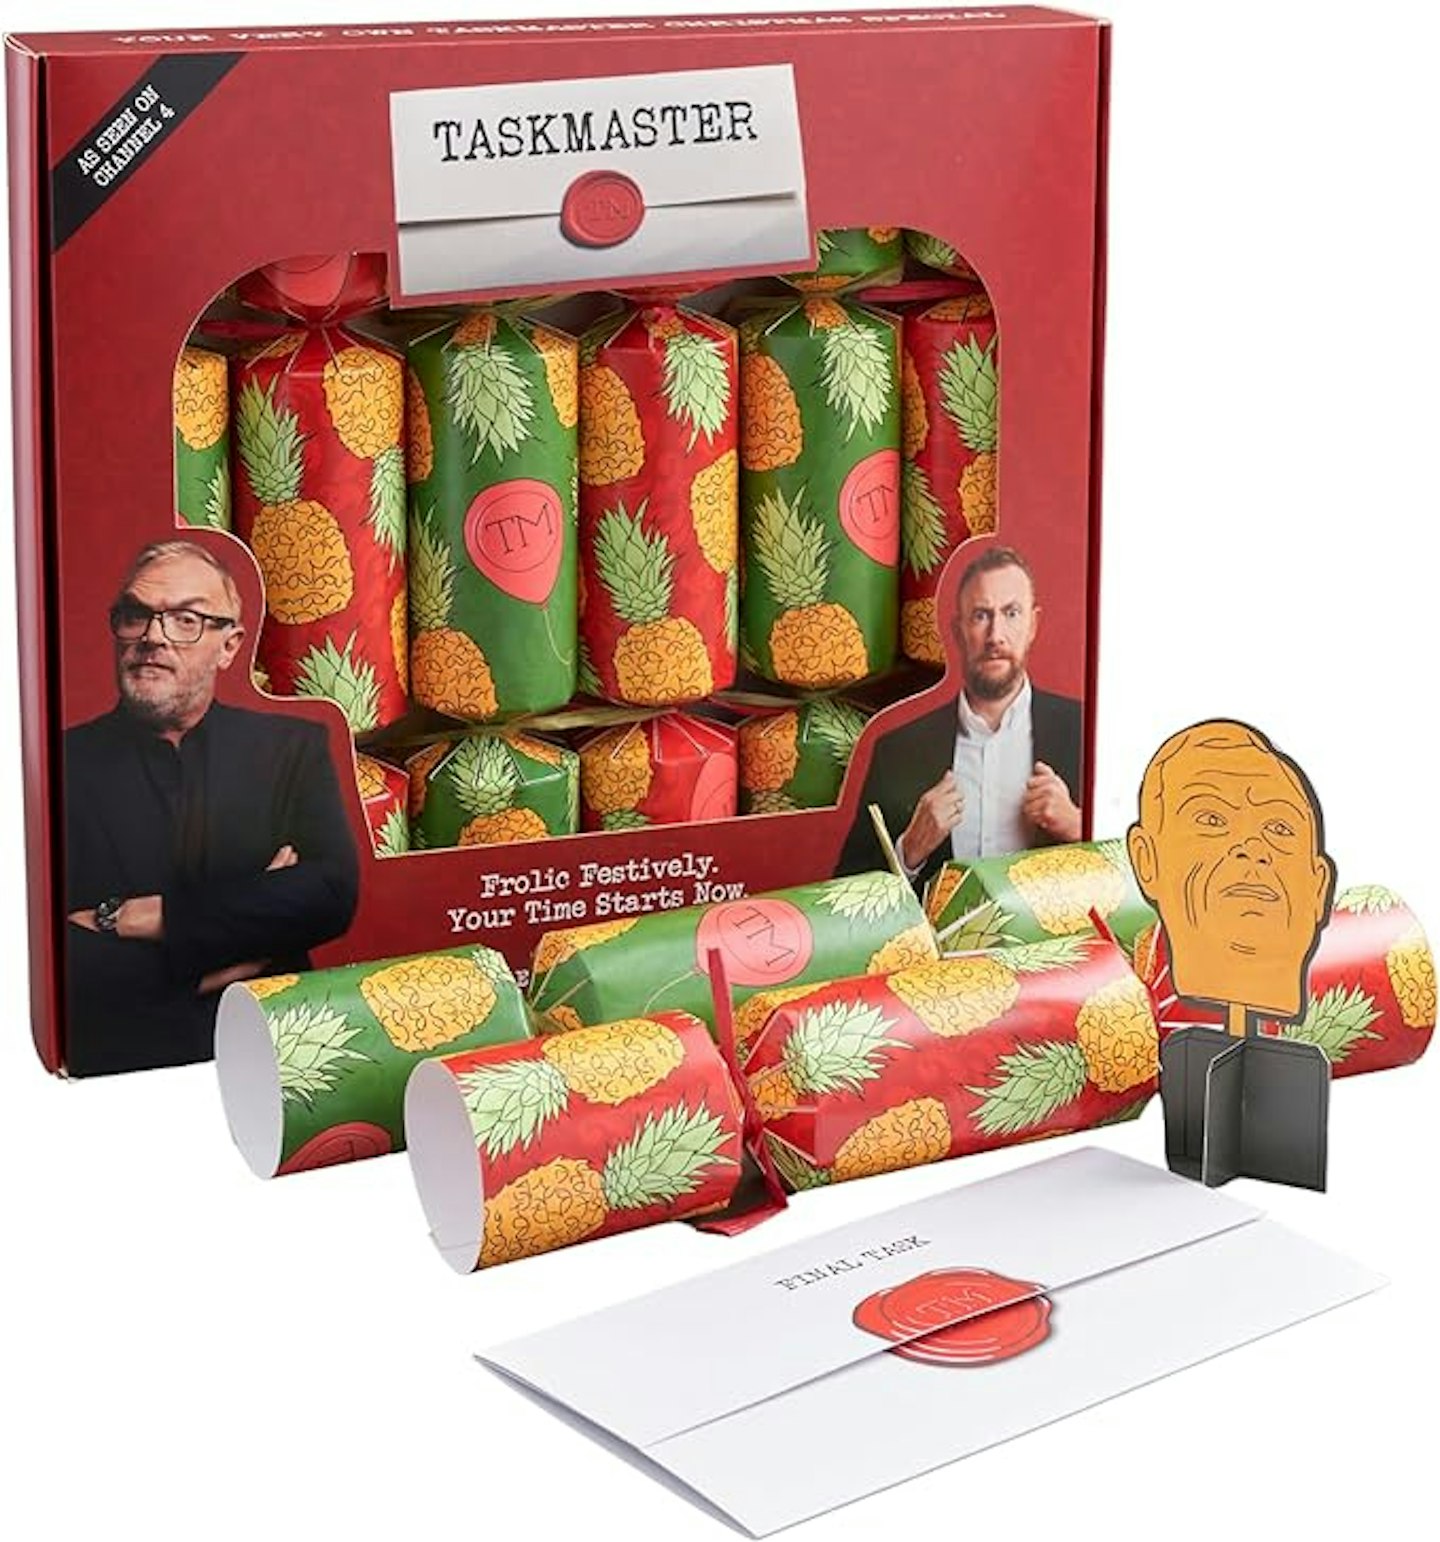 Taskmaster - Christmas dinner table ideas